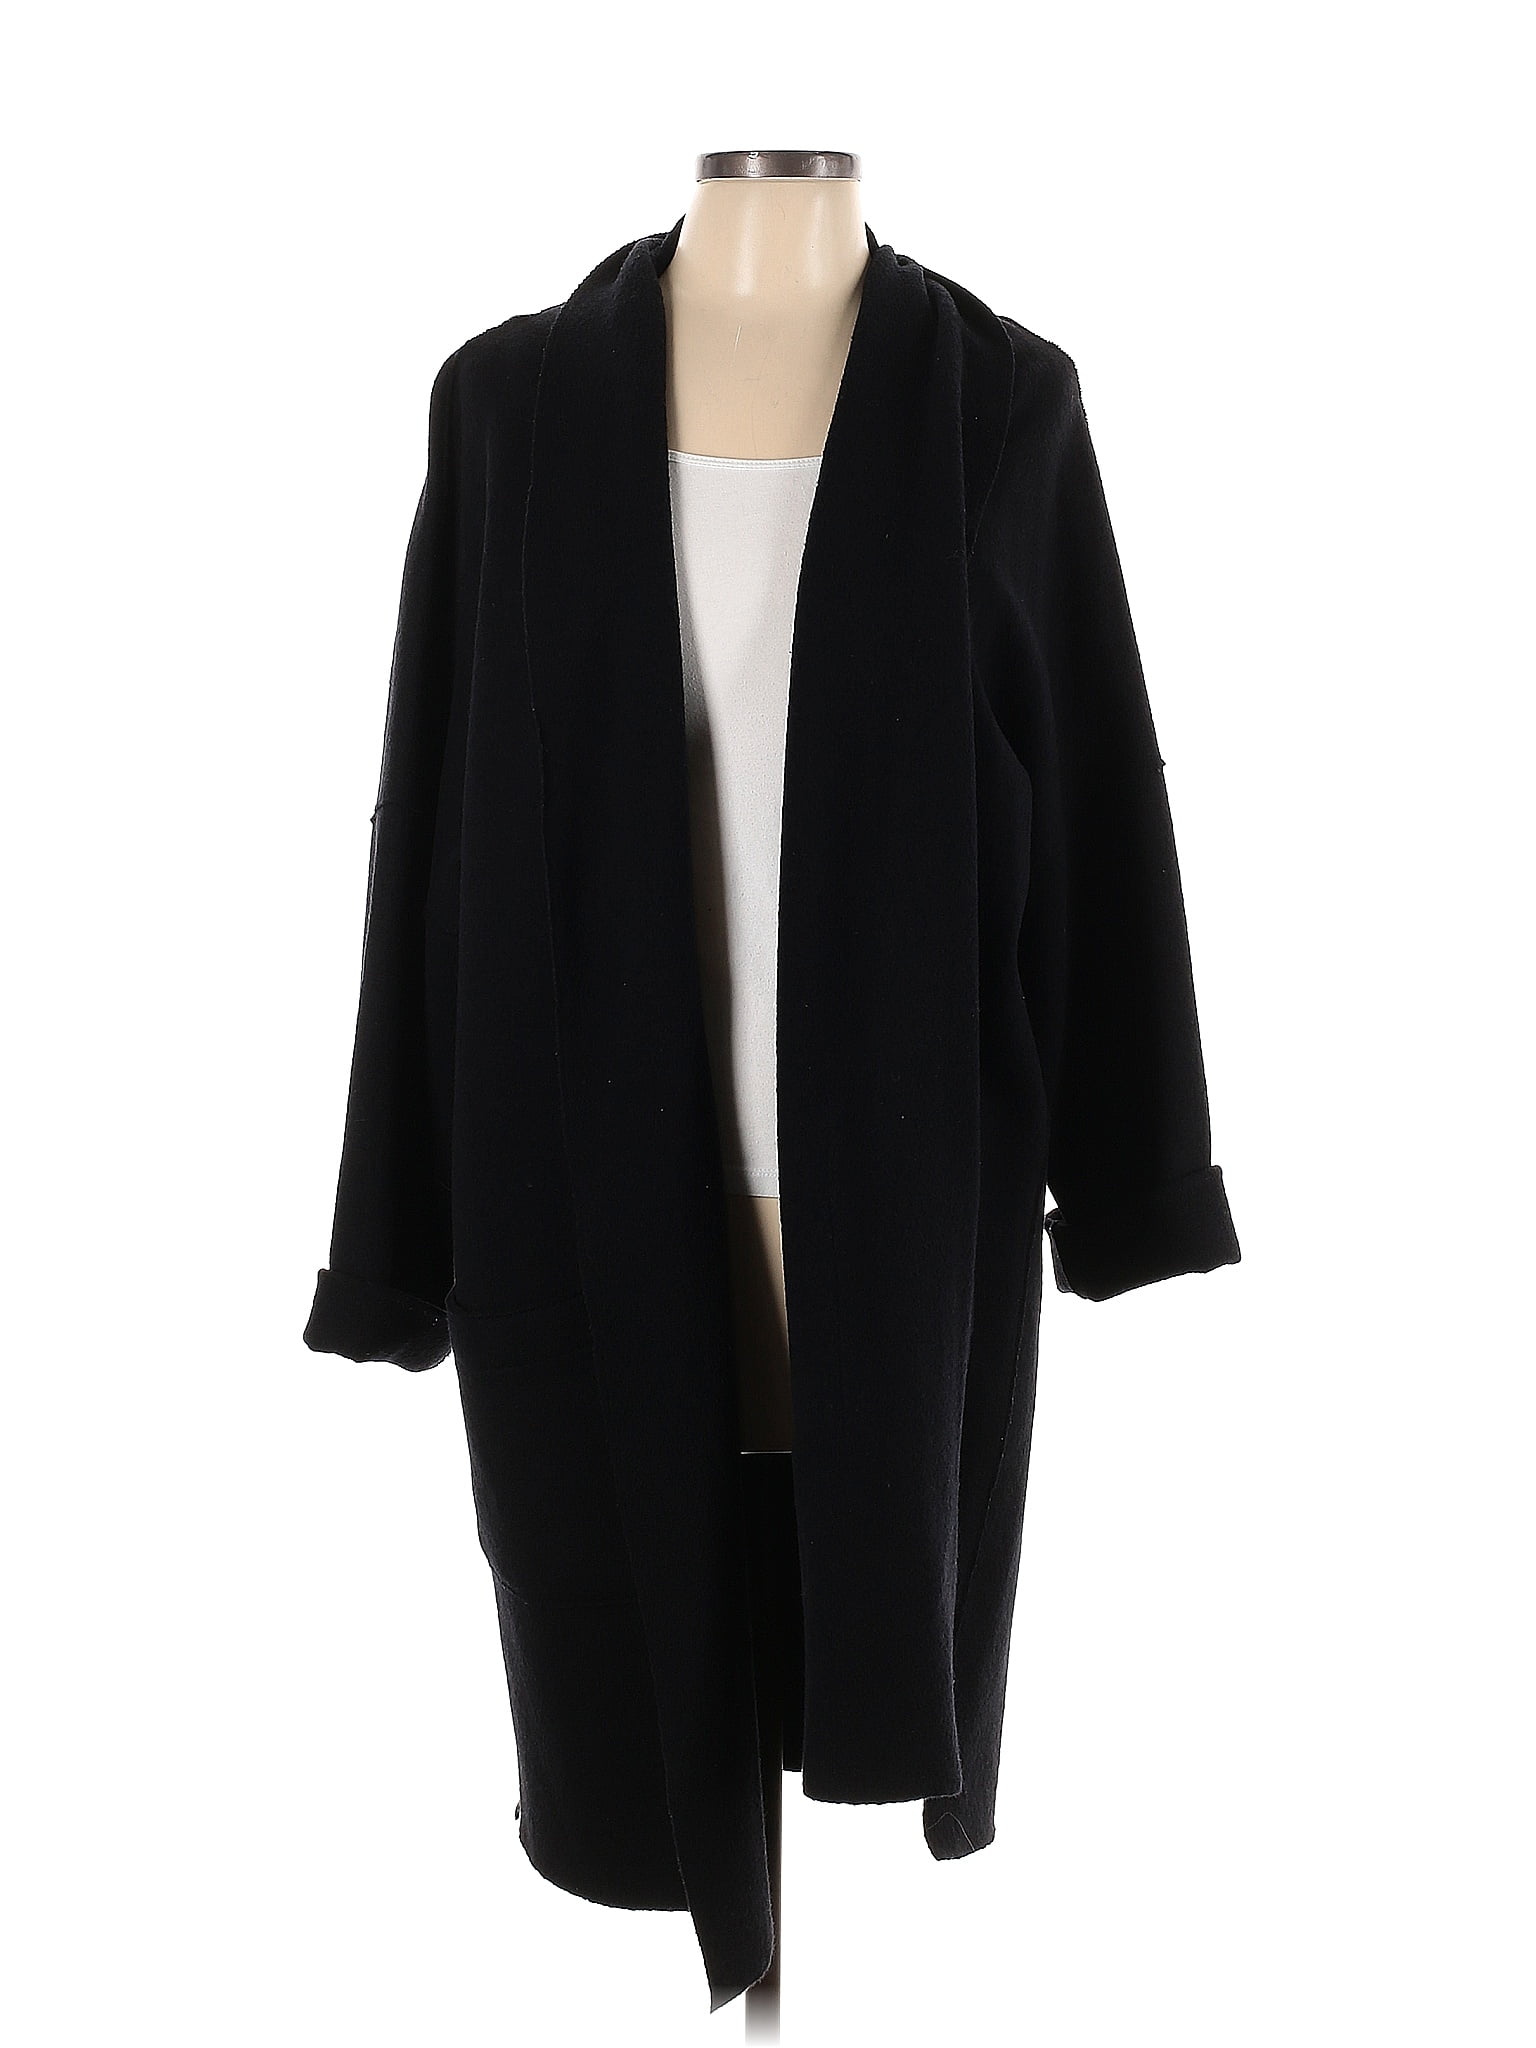 Eileen Fisher 100% Wool Solid Black Jacket Size L - 74% off | ThredUp